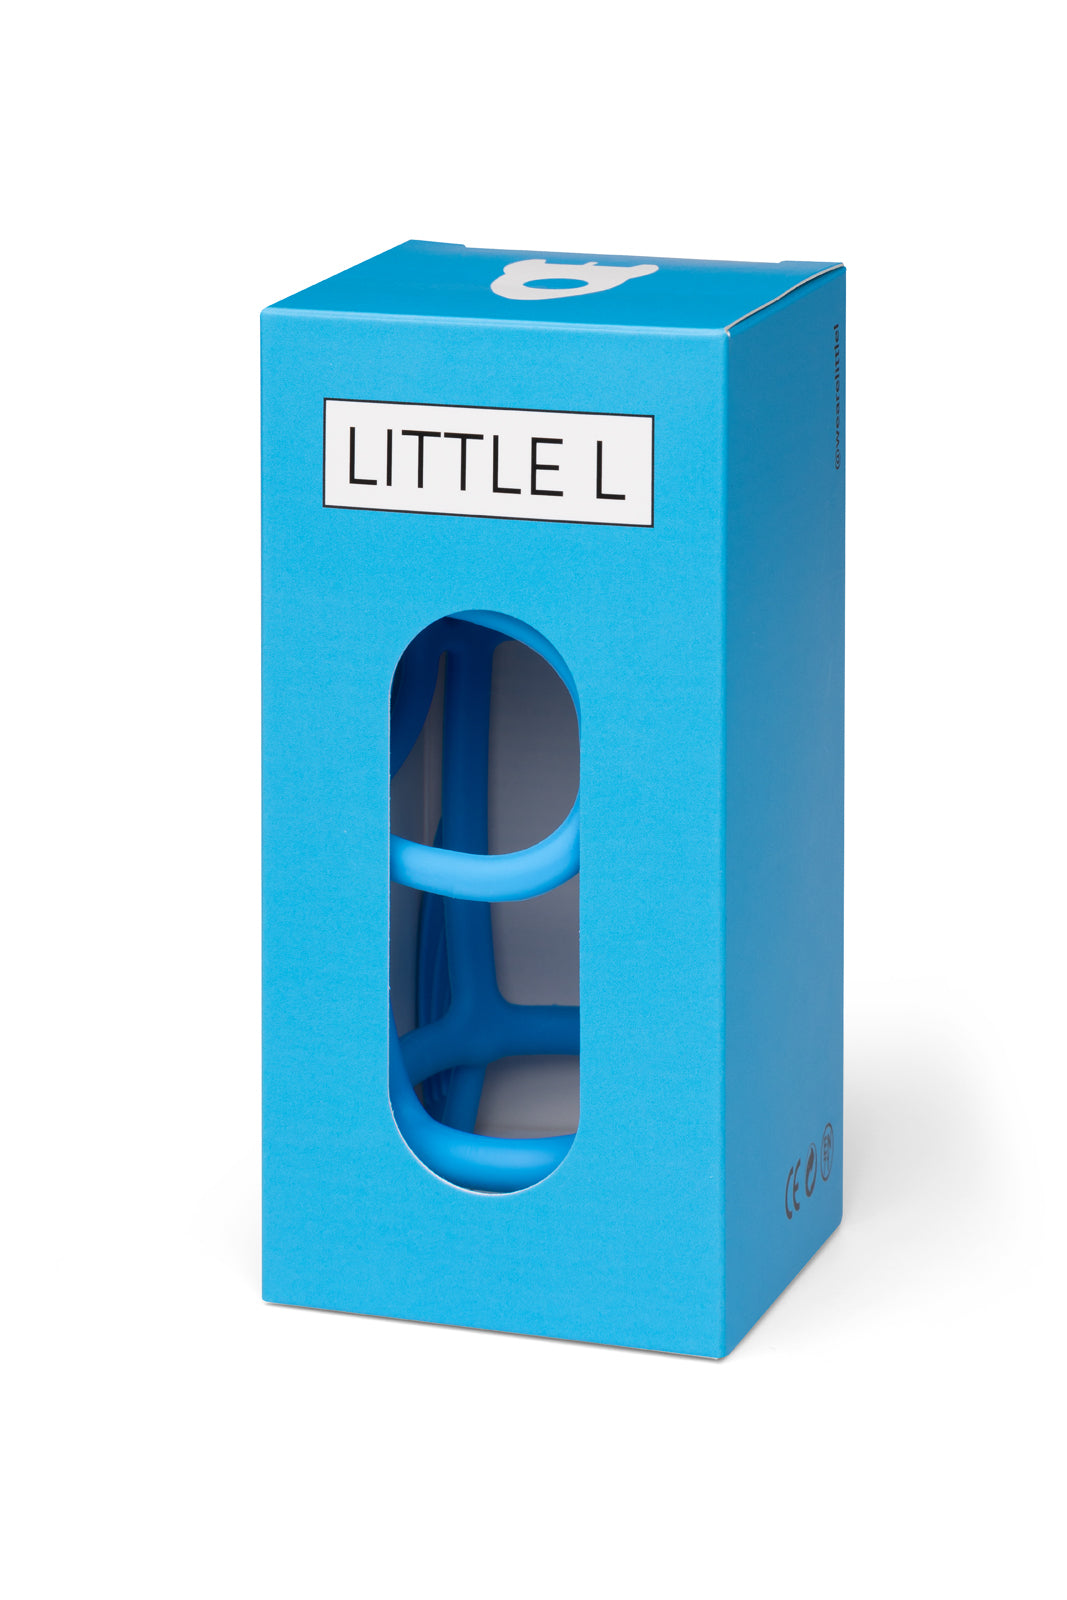 Little L Soft Toys - Bijtringen - Raket Blauw